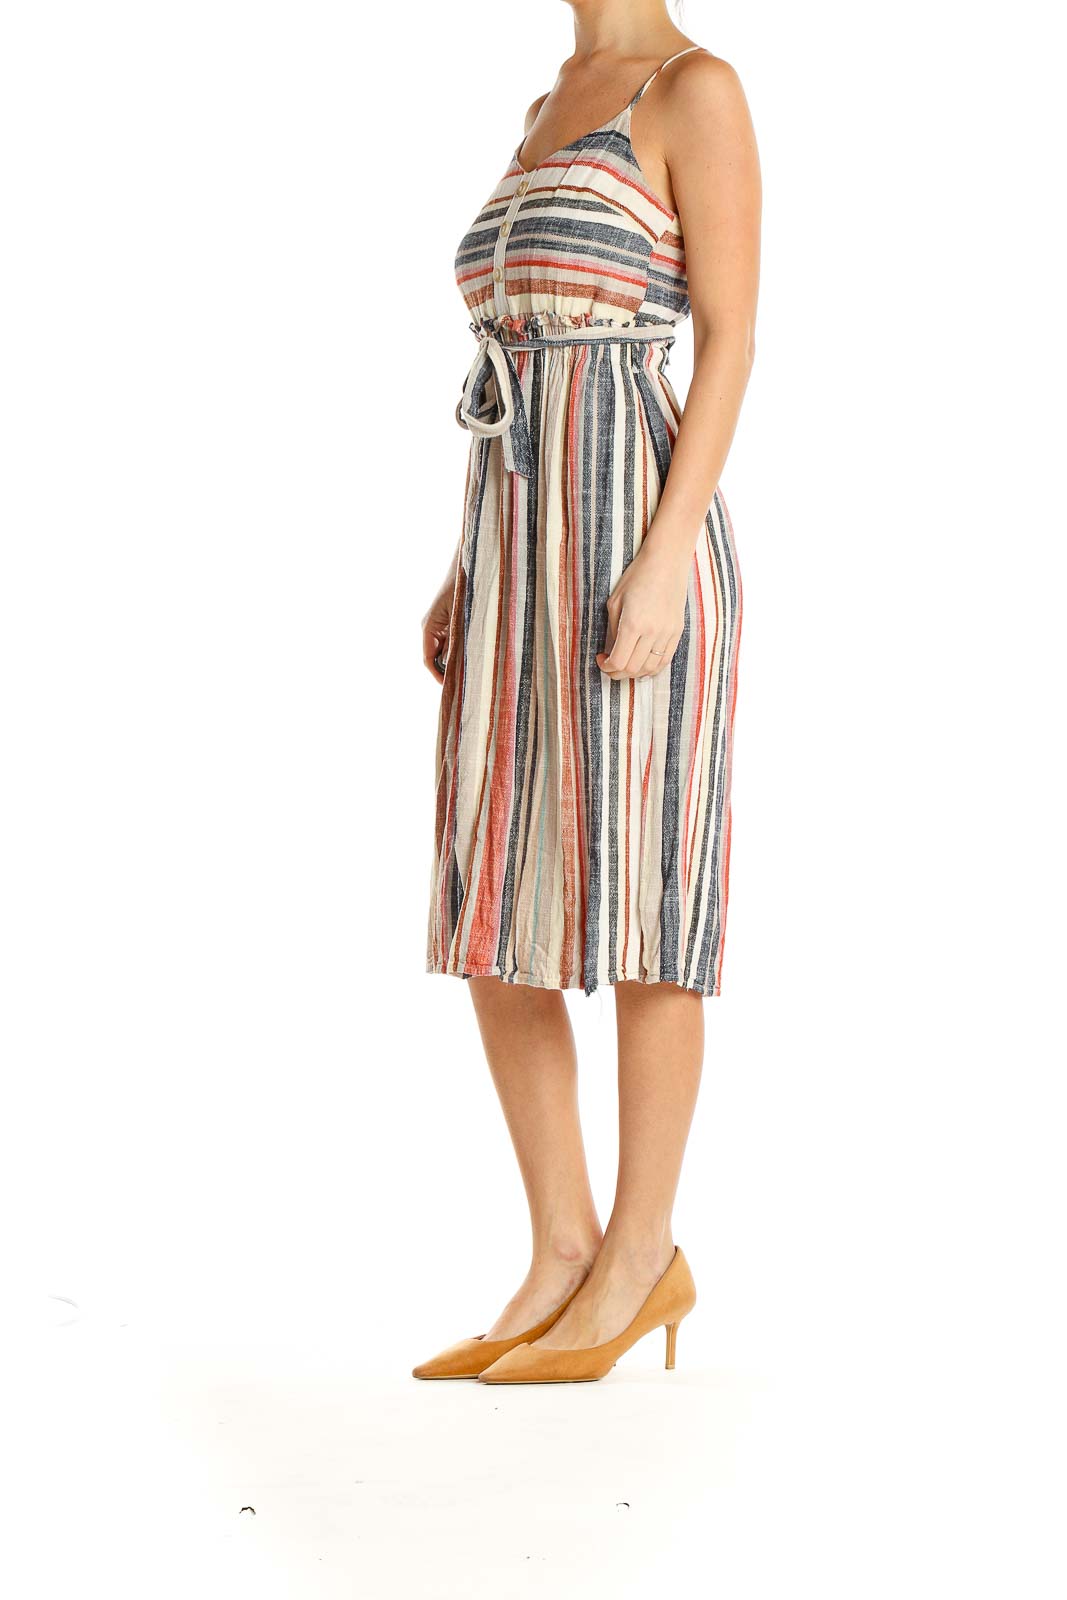 Suzy Shier Glitter Knit V-Neck Fit & Flare Knee Length Dress, Rose